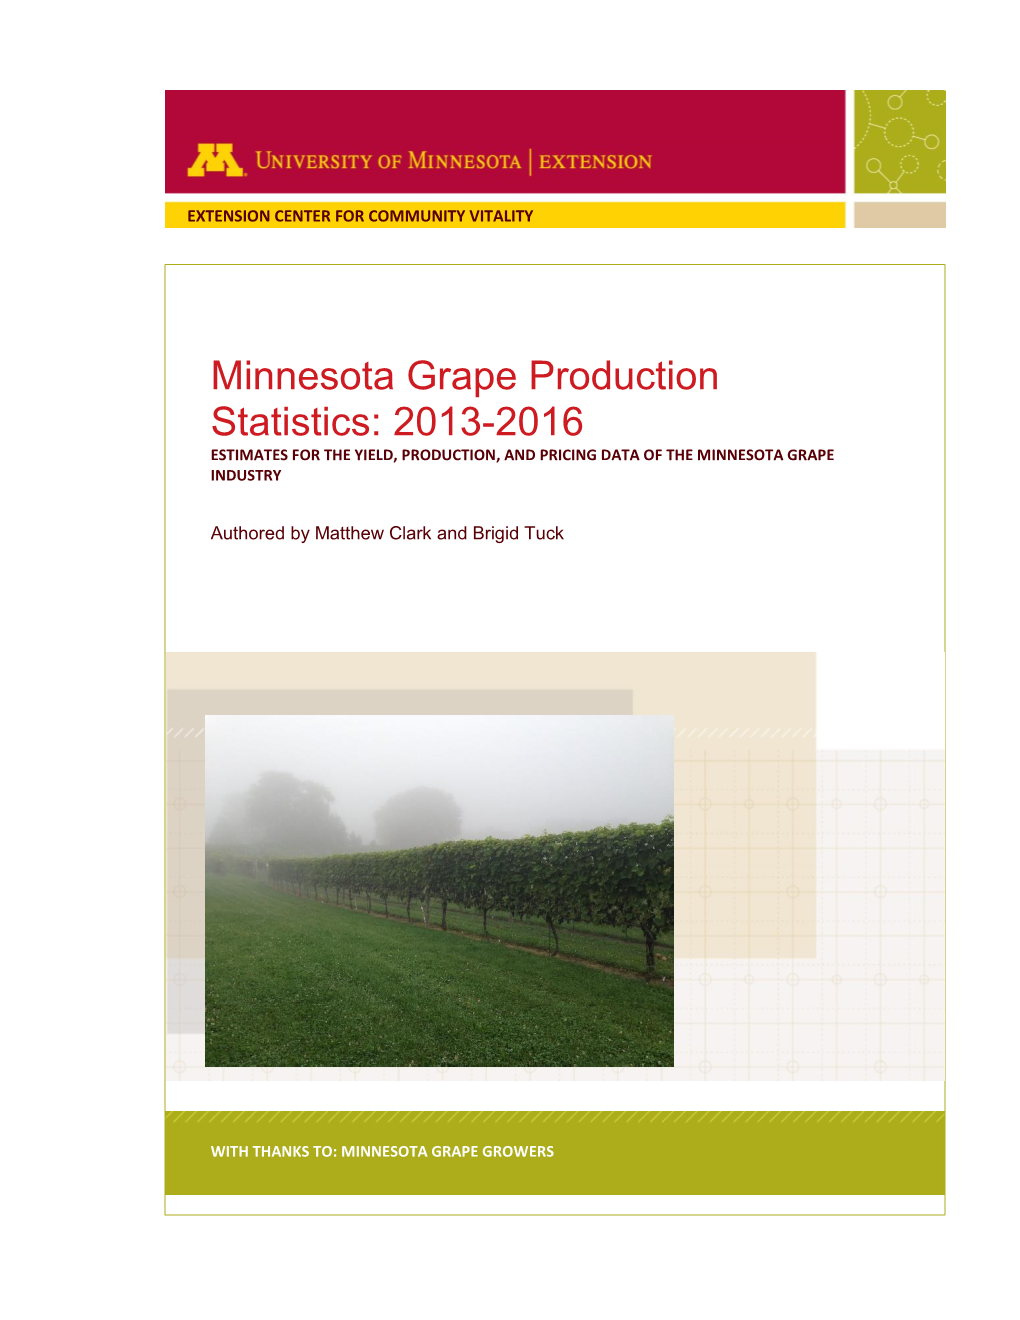 Minnesota Grape Production Statistics: 2013-2016